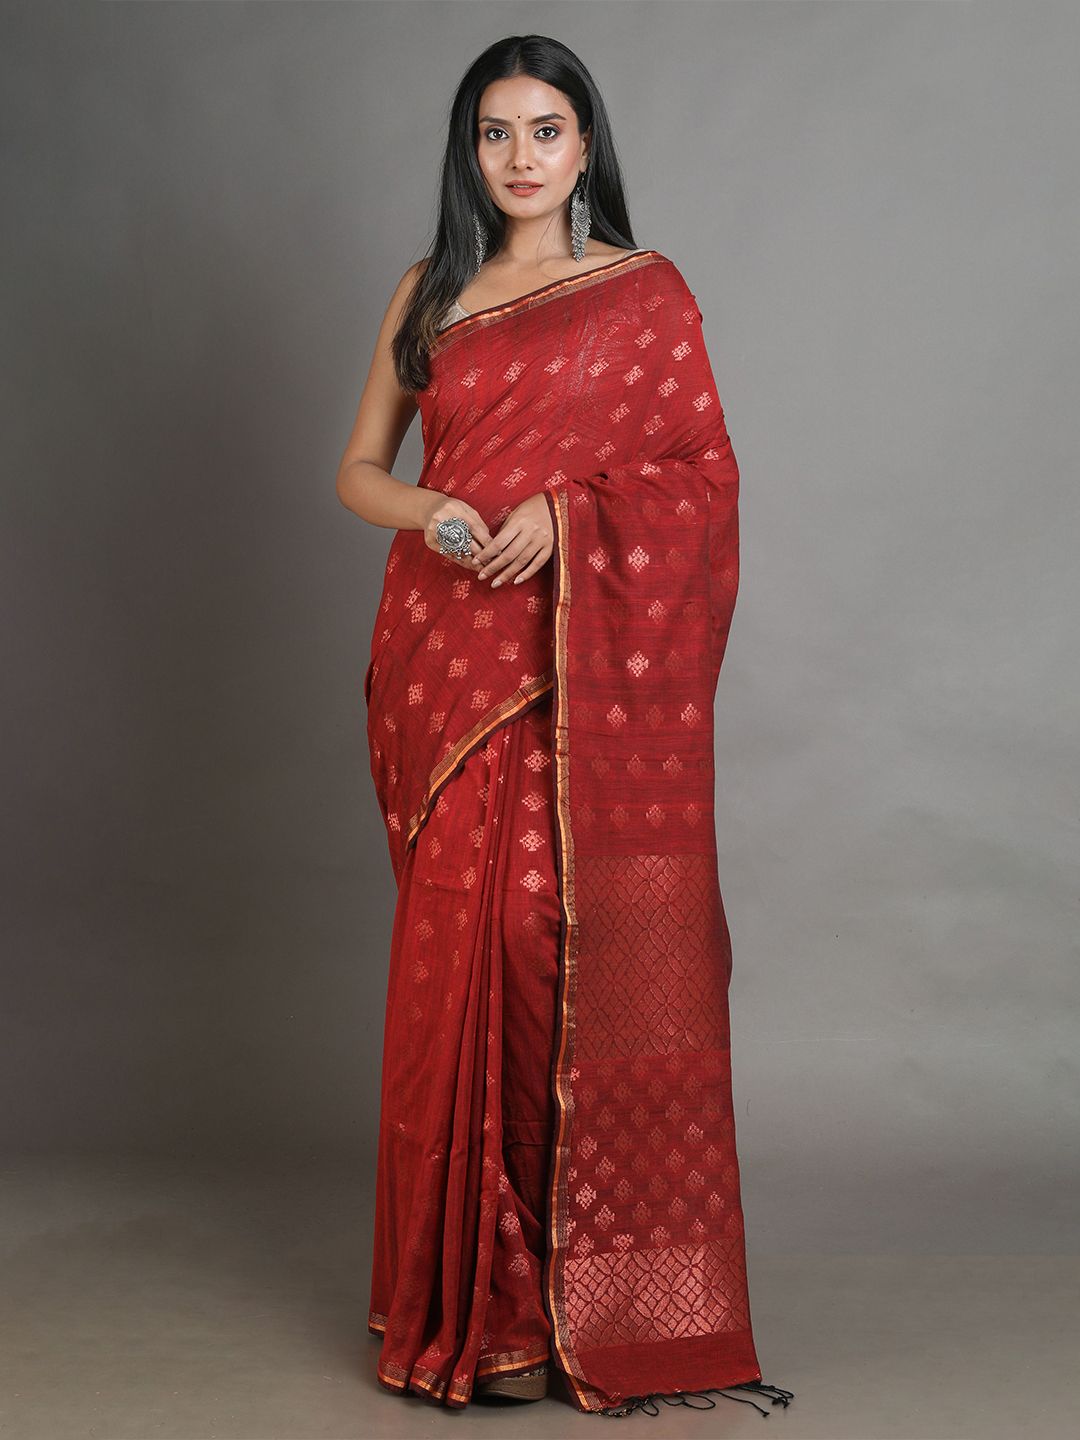 Arhi Red Woven Design Pure Linen Saree Price in India